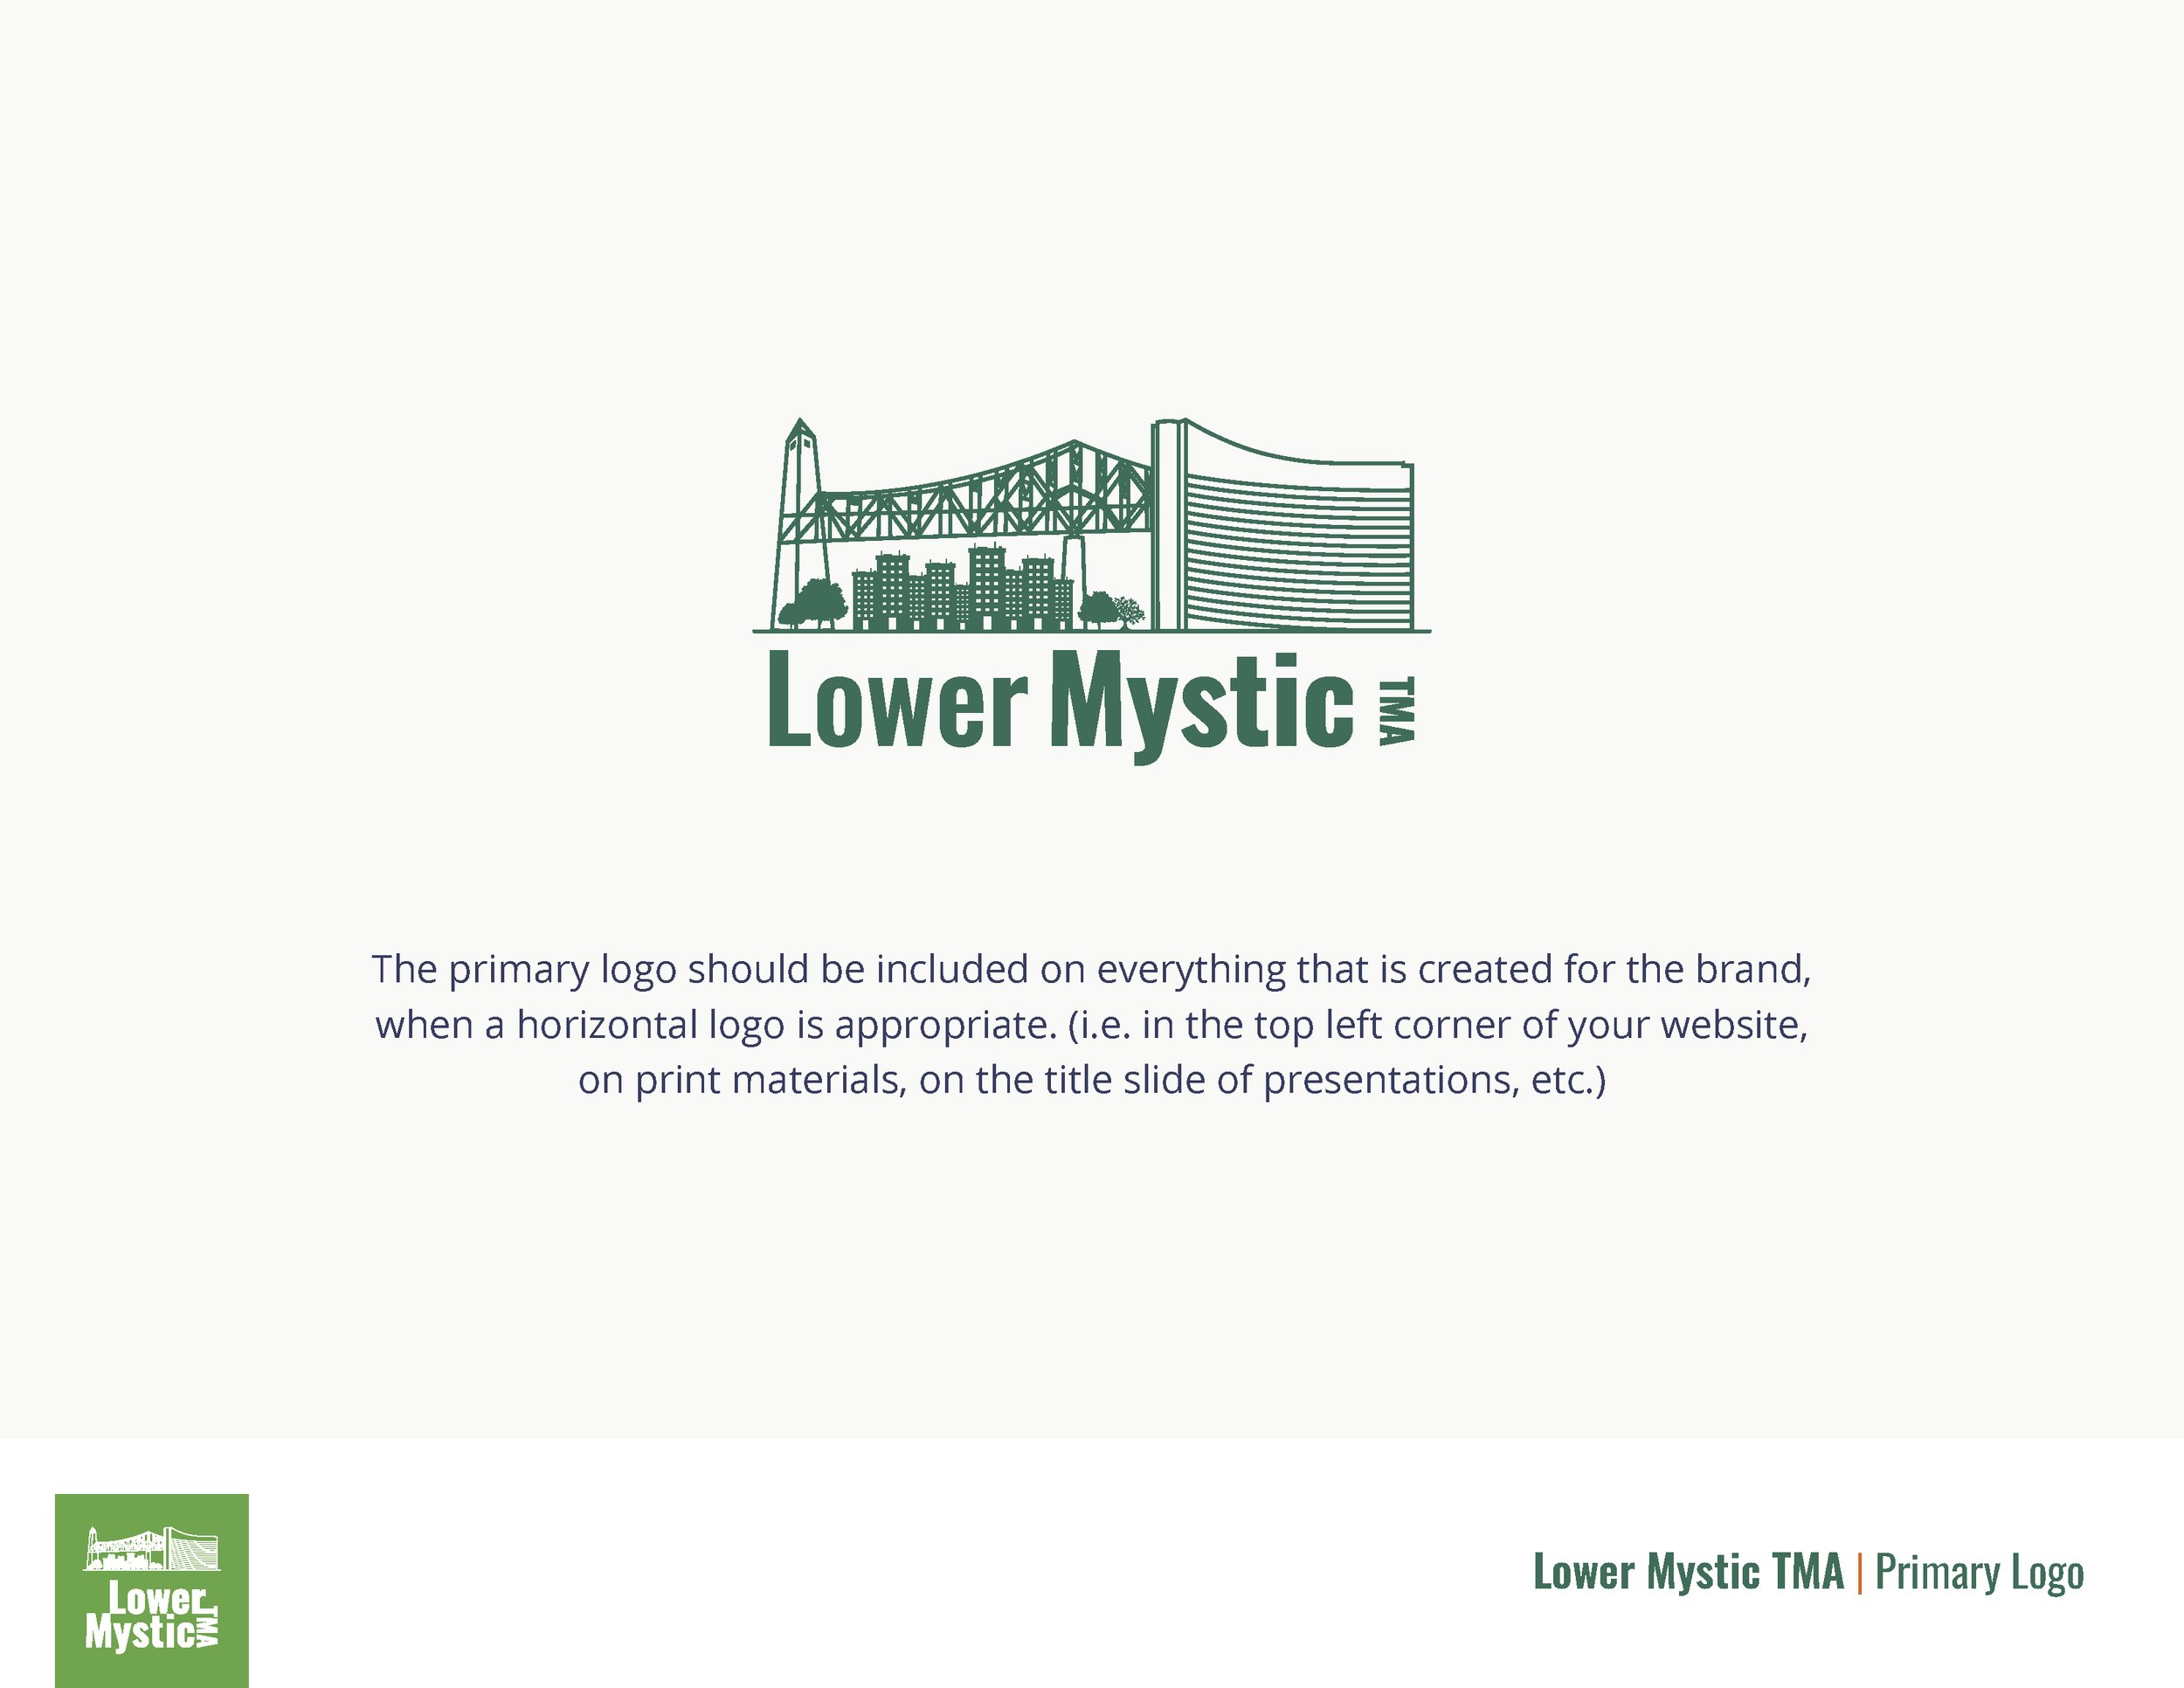 Lower Mystic TMA Primary Logo by Hunter Design Studio